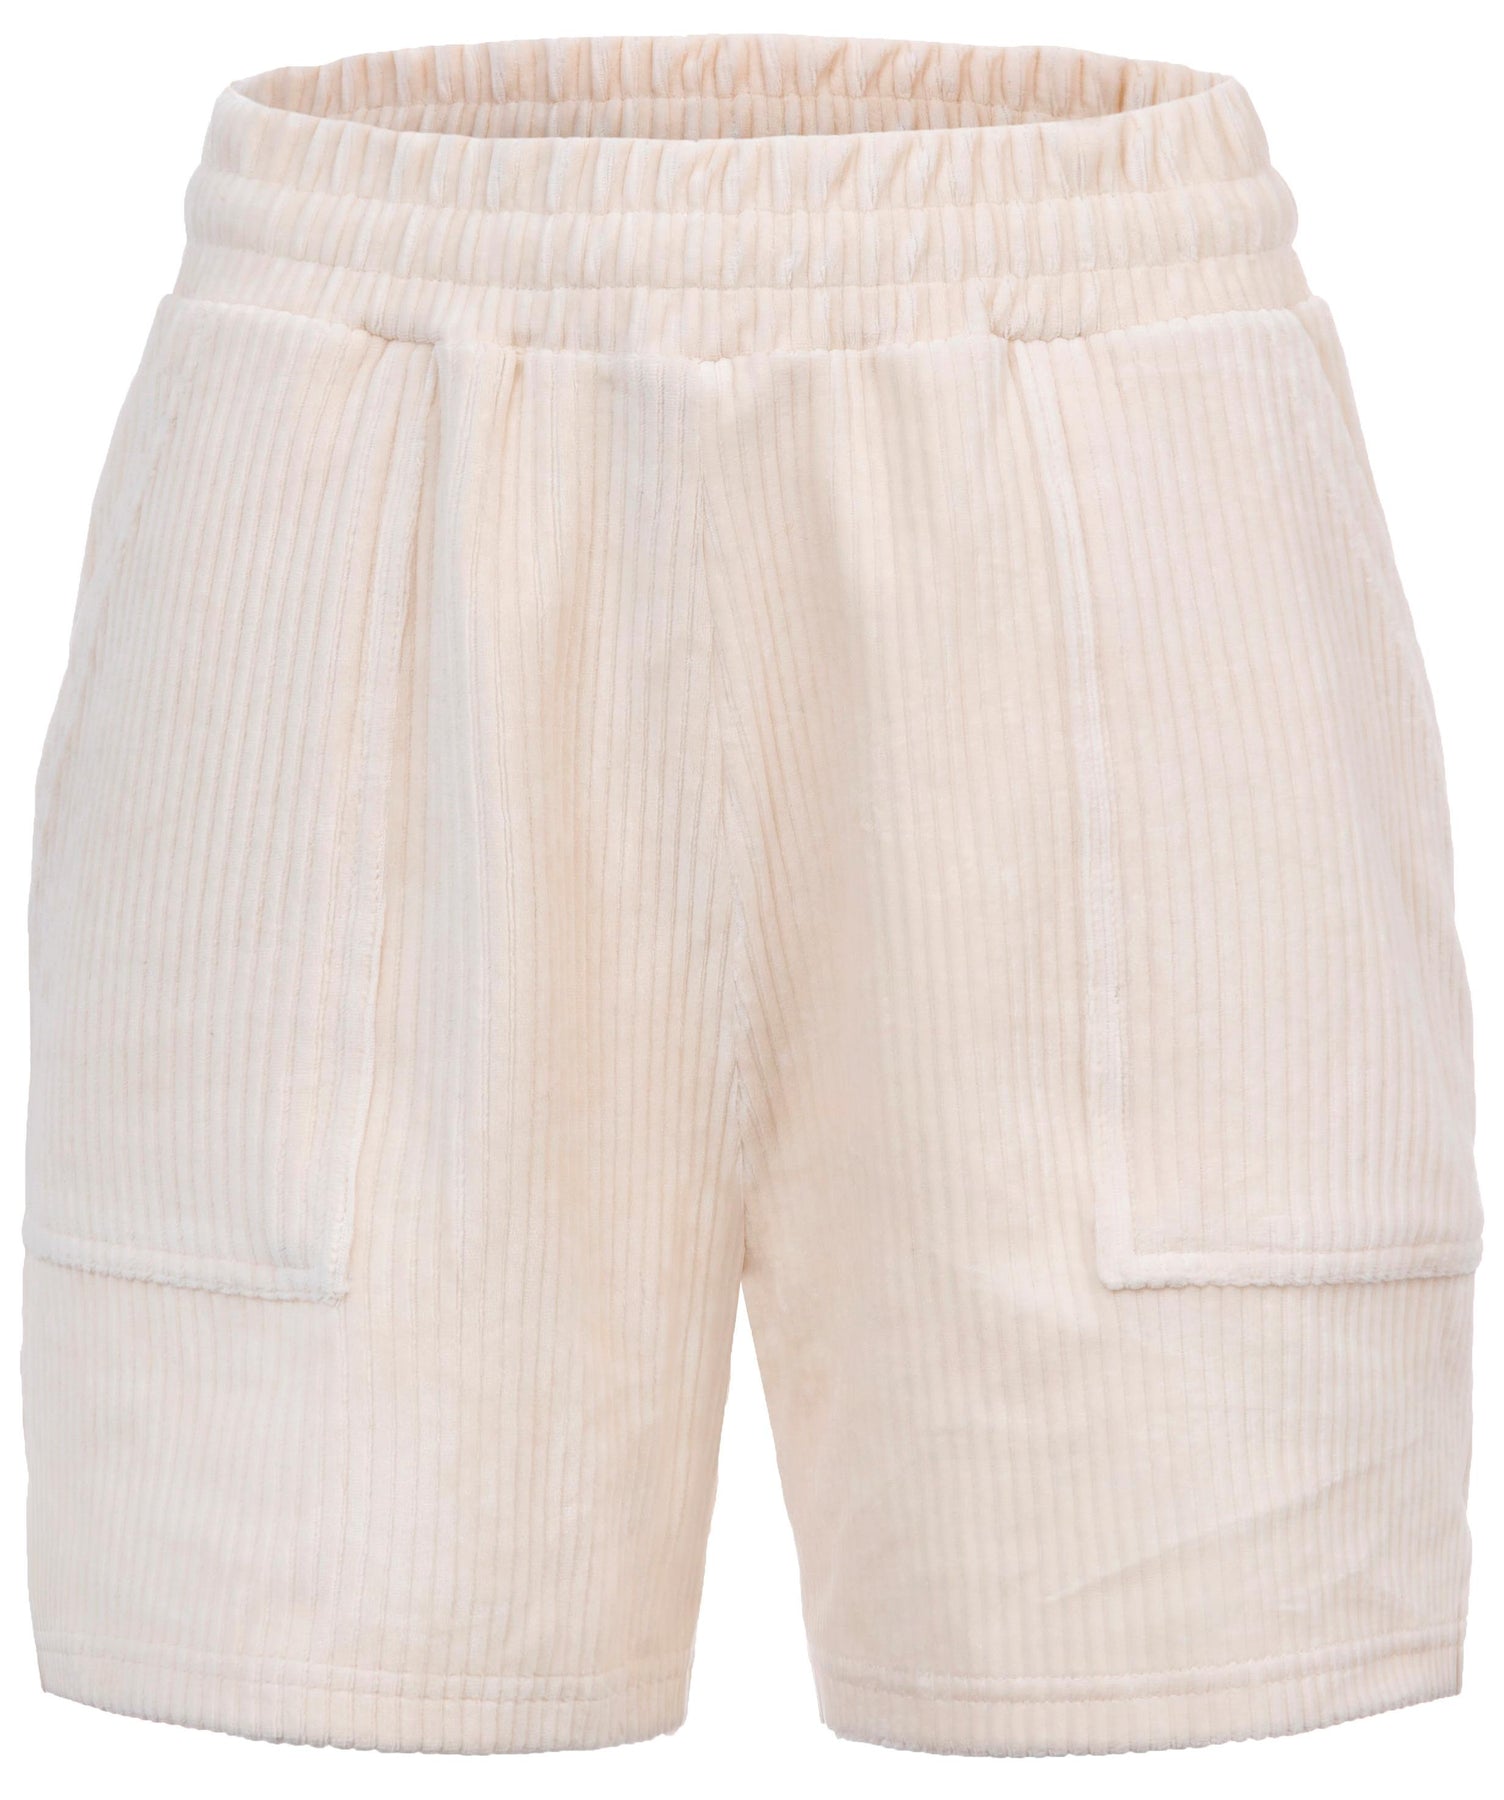 Sutton Shorts - Cream